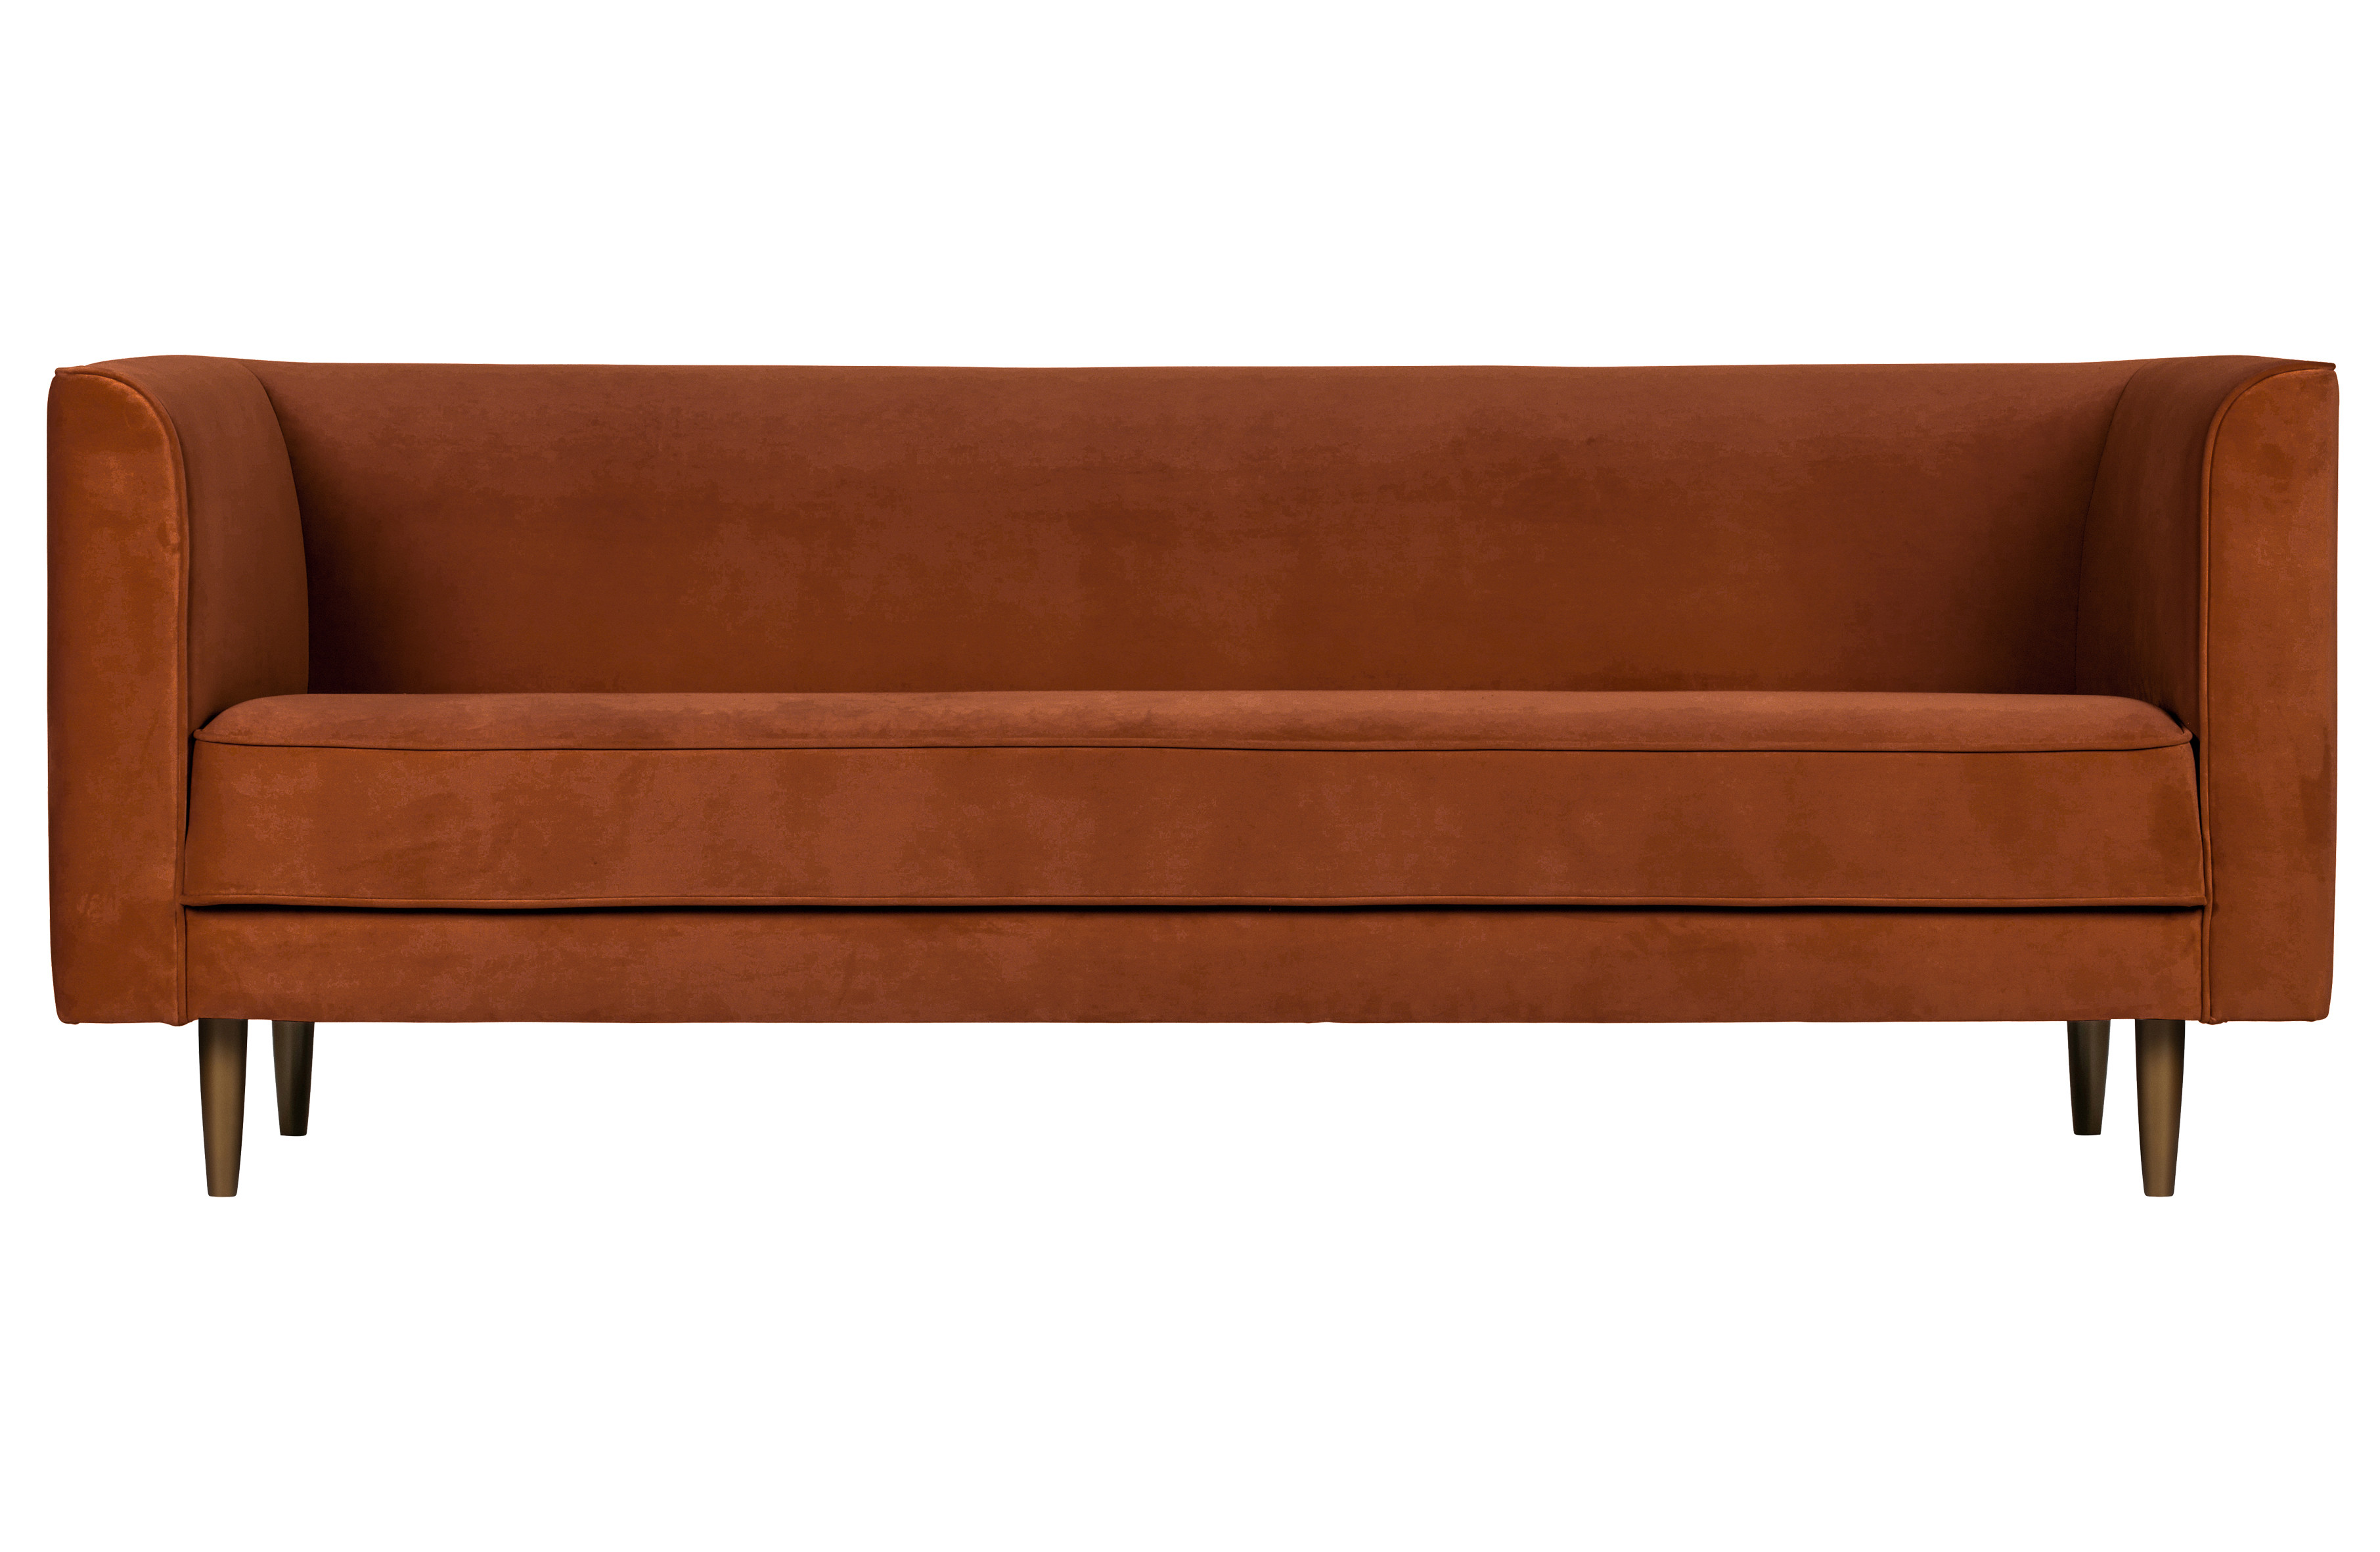 Rent a Sofa 3 seater Studio velvet rust? Rent at KeyPro furniture rental!